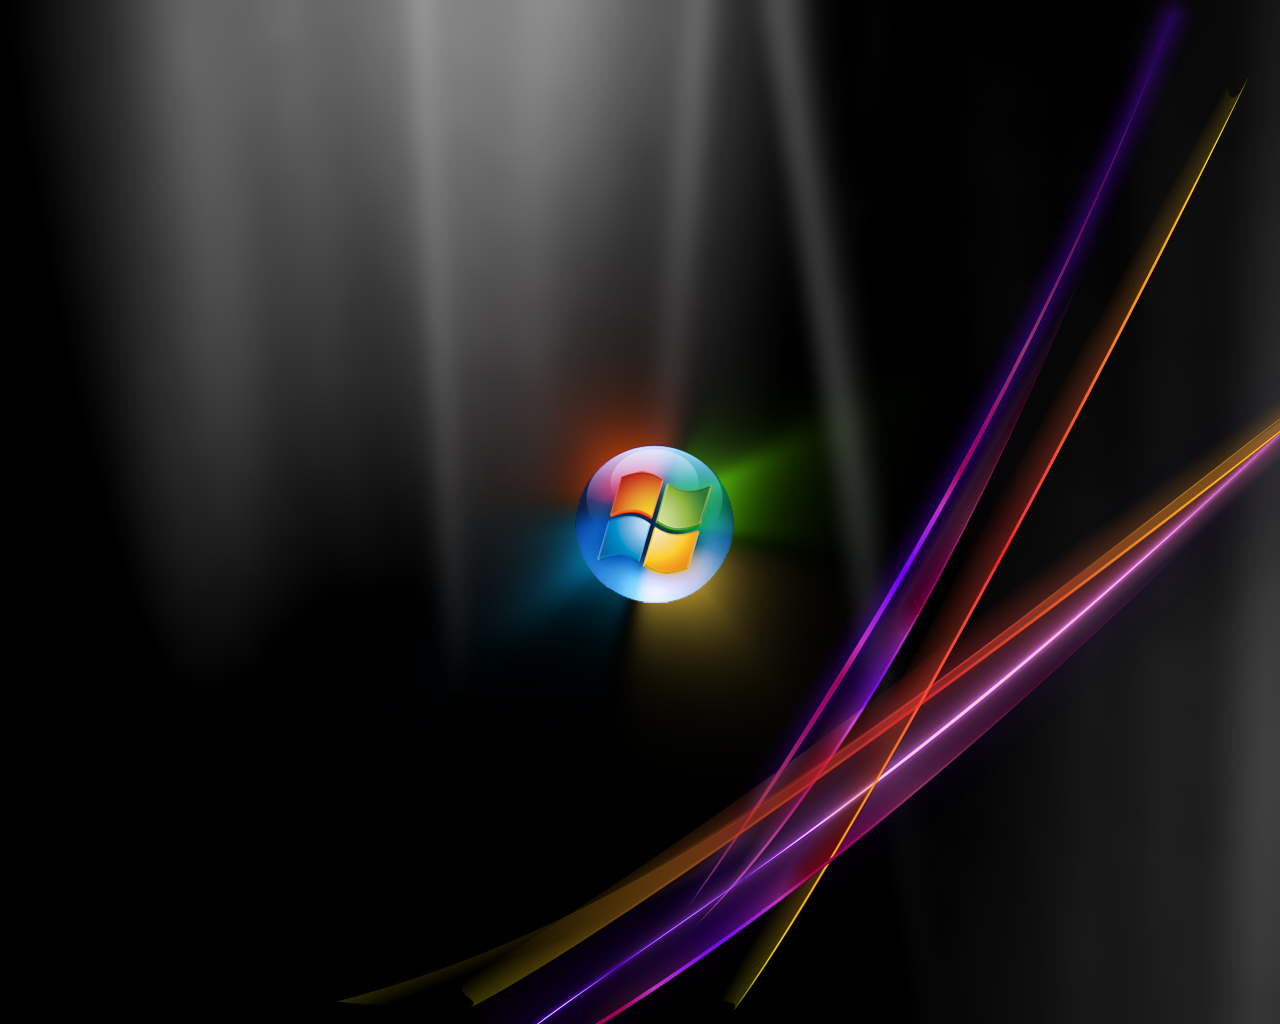 Previous, Computers - Windows Vista - Windows Vista wallpaper